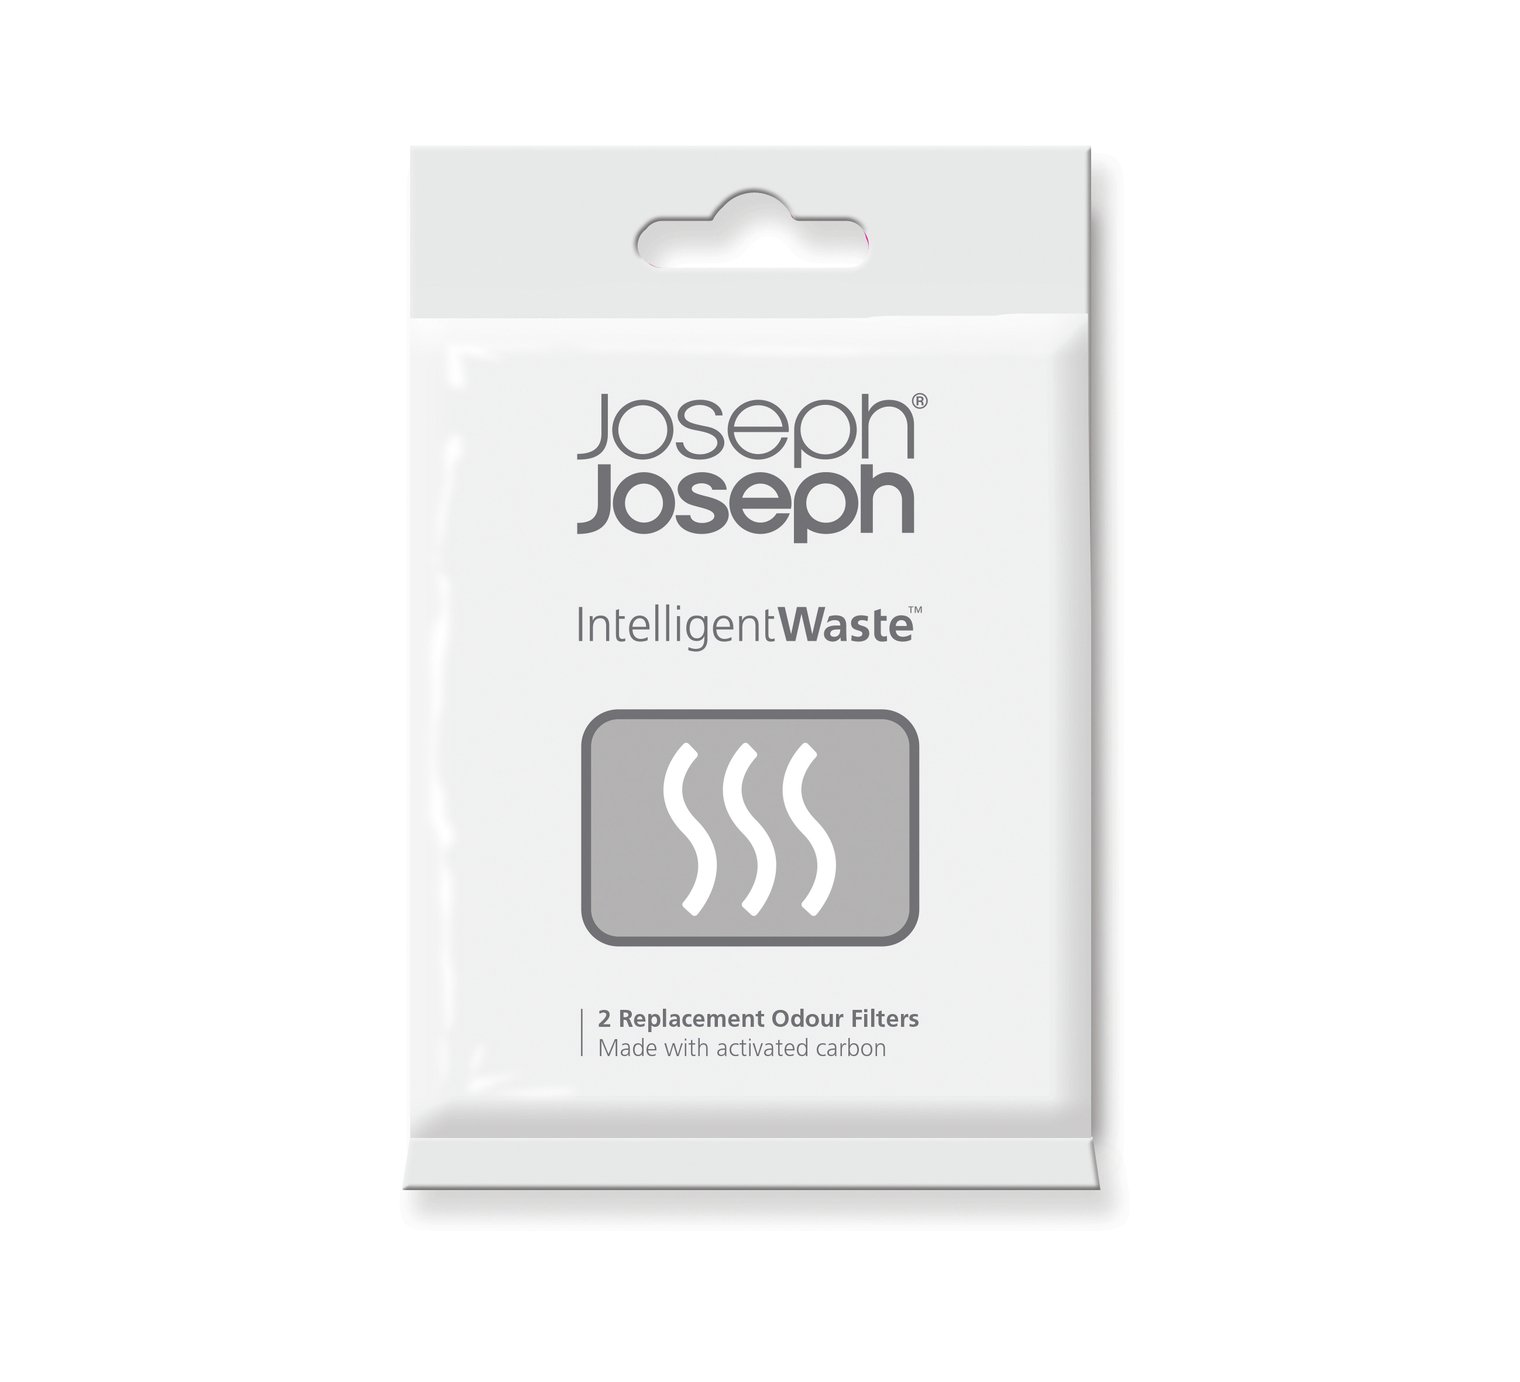 Joseph Joseph Replacement Odour Filters Review